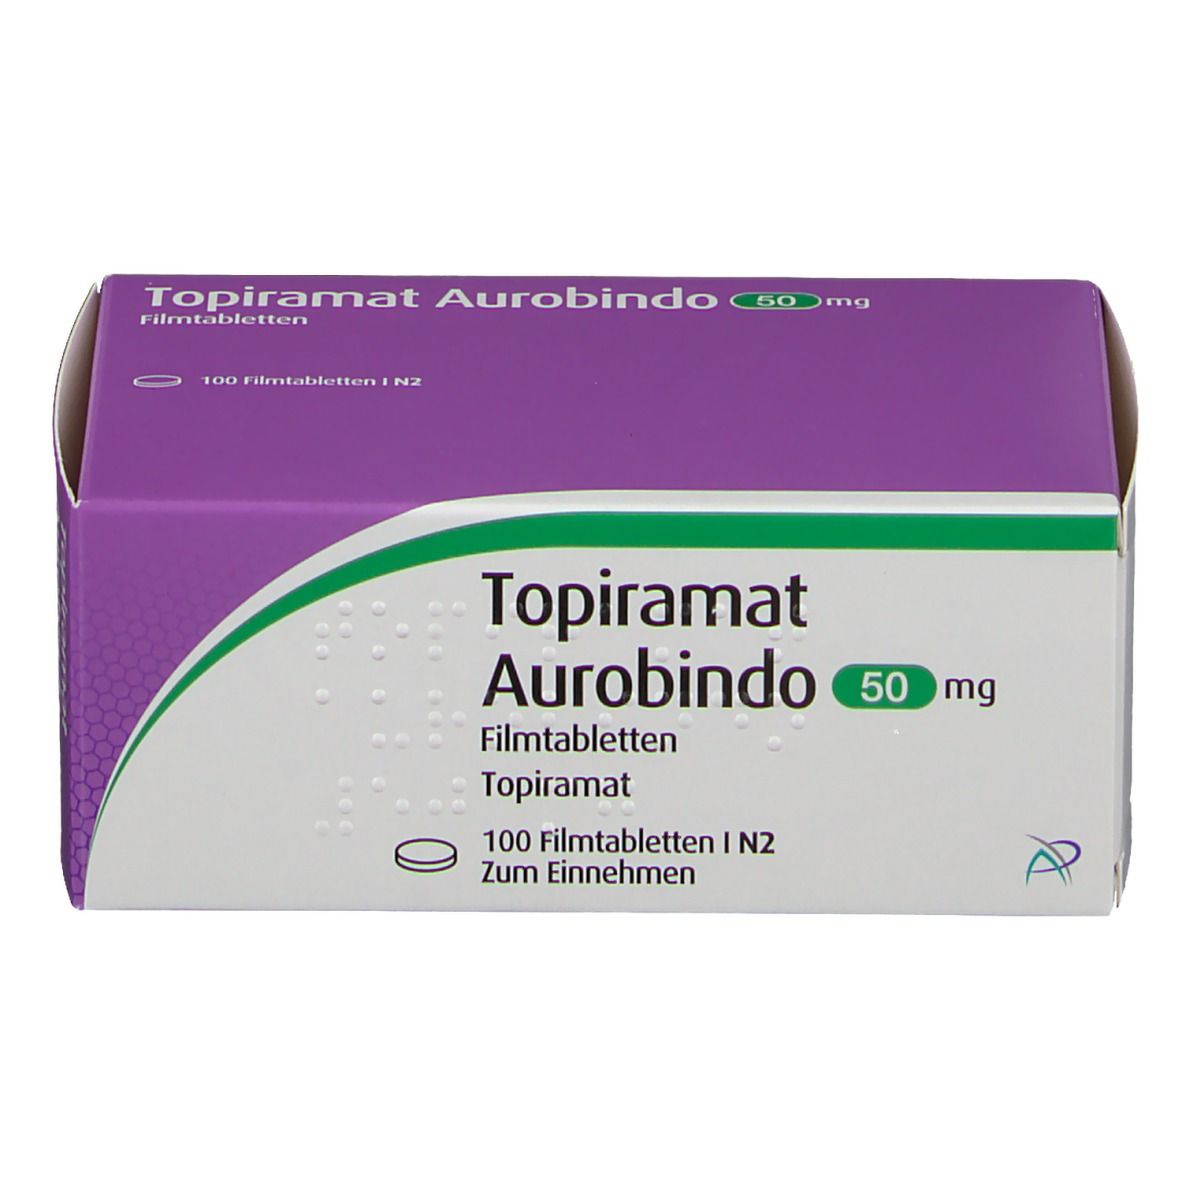 Topiramat Aurobindo 50 mg